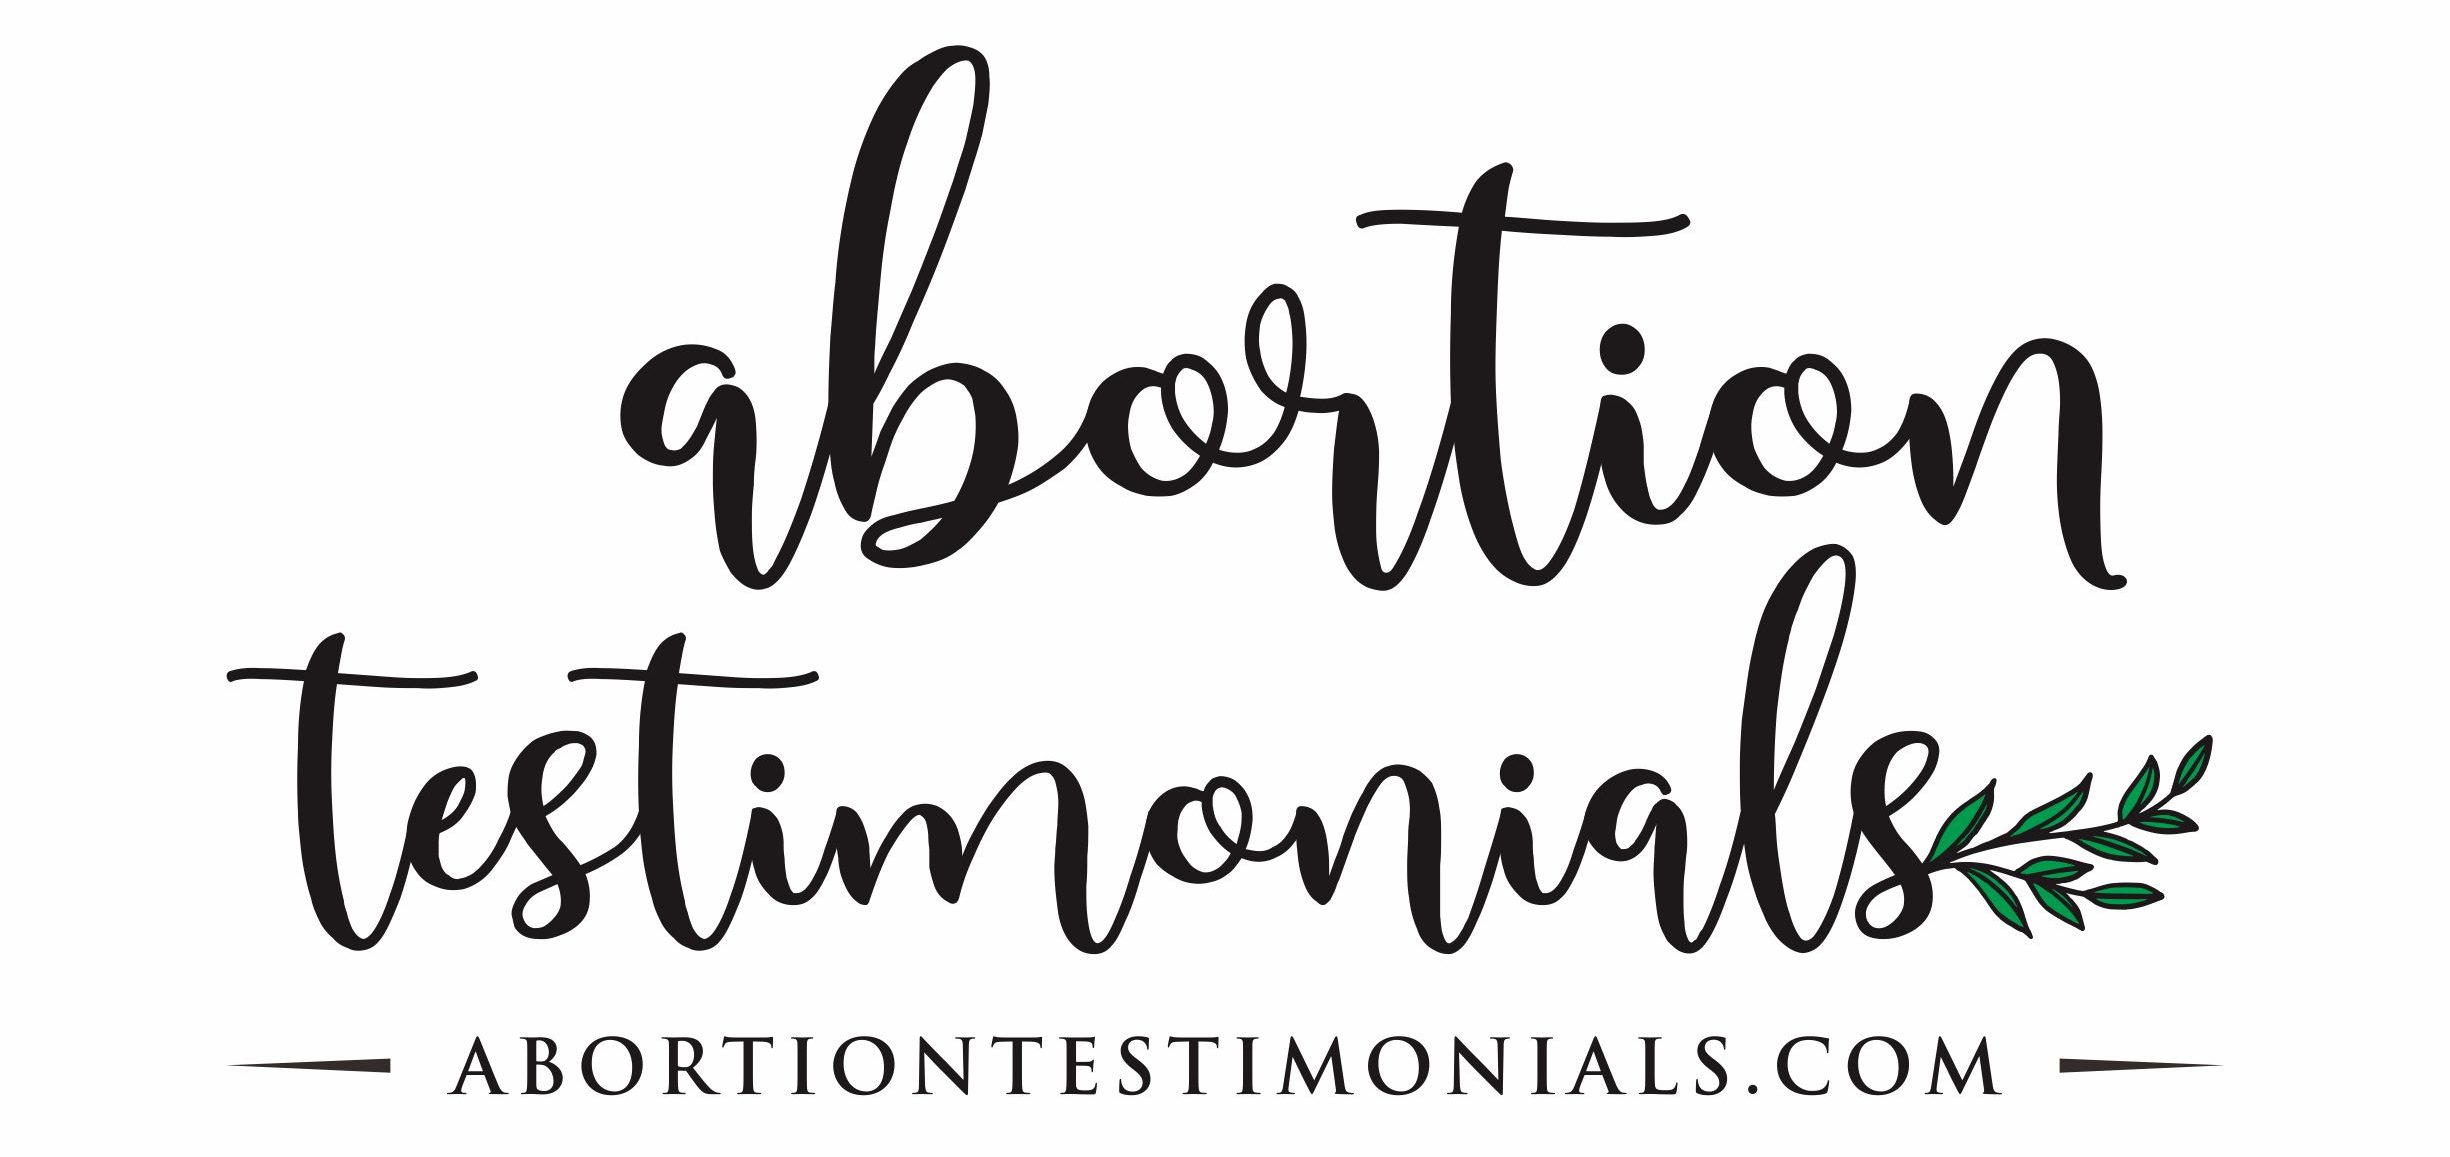 Abortion Testimonials